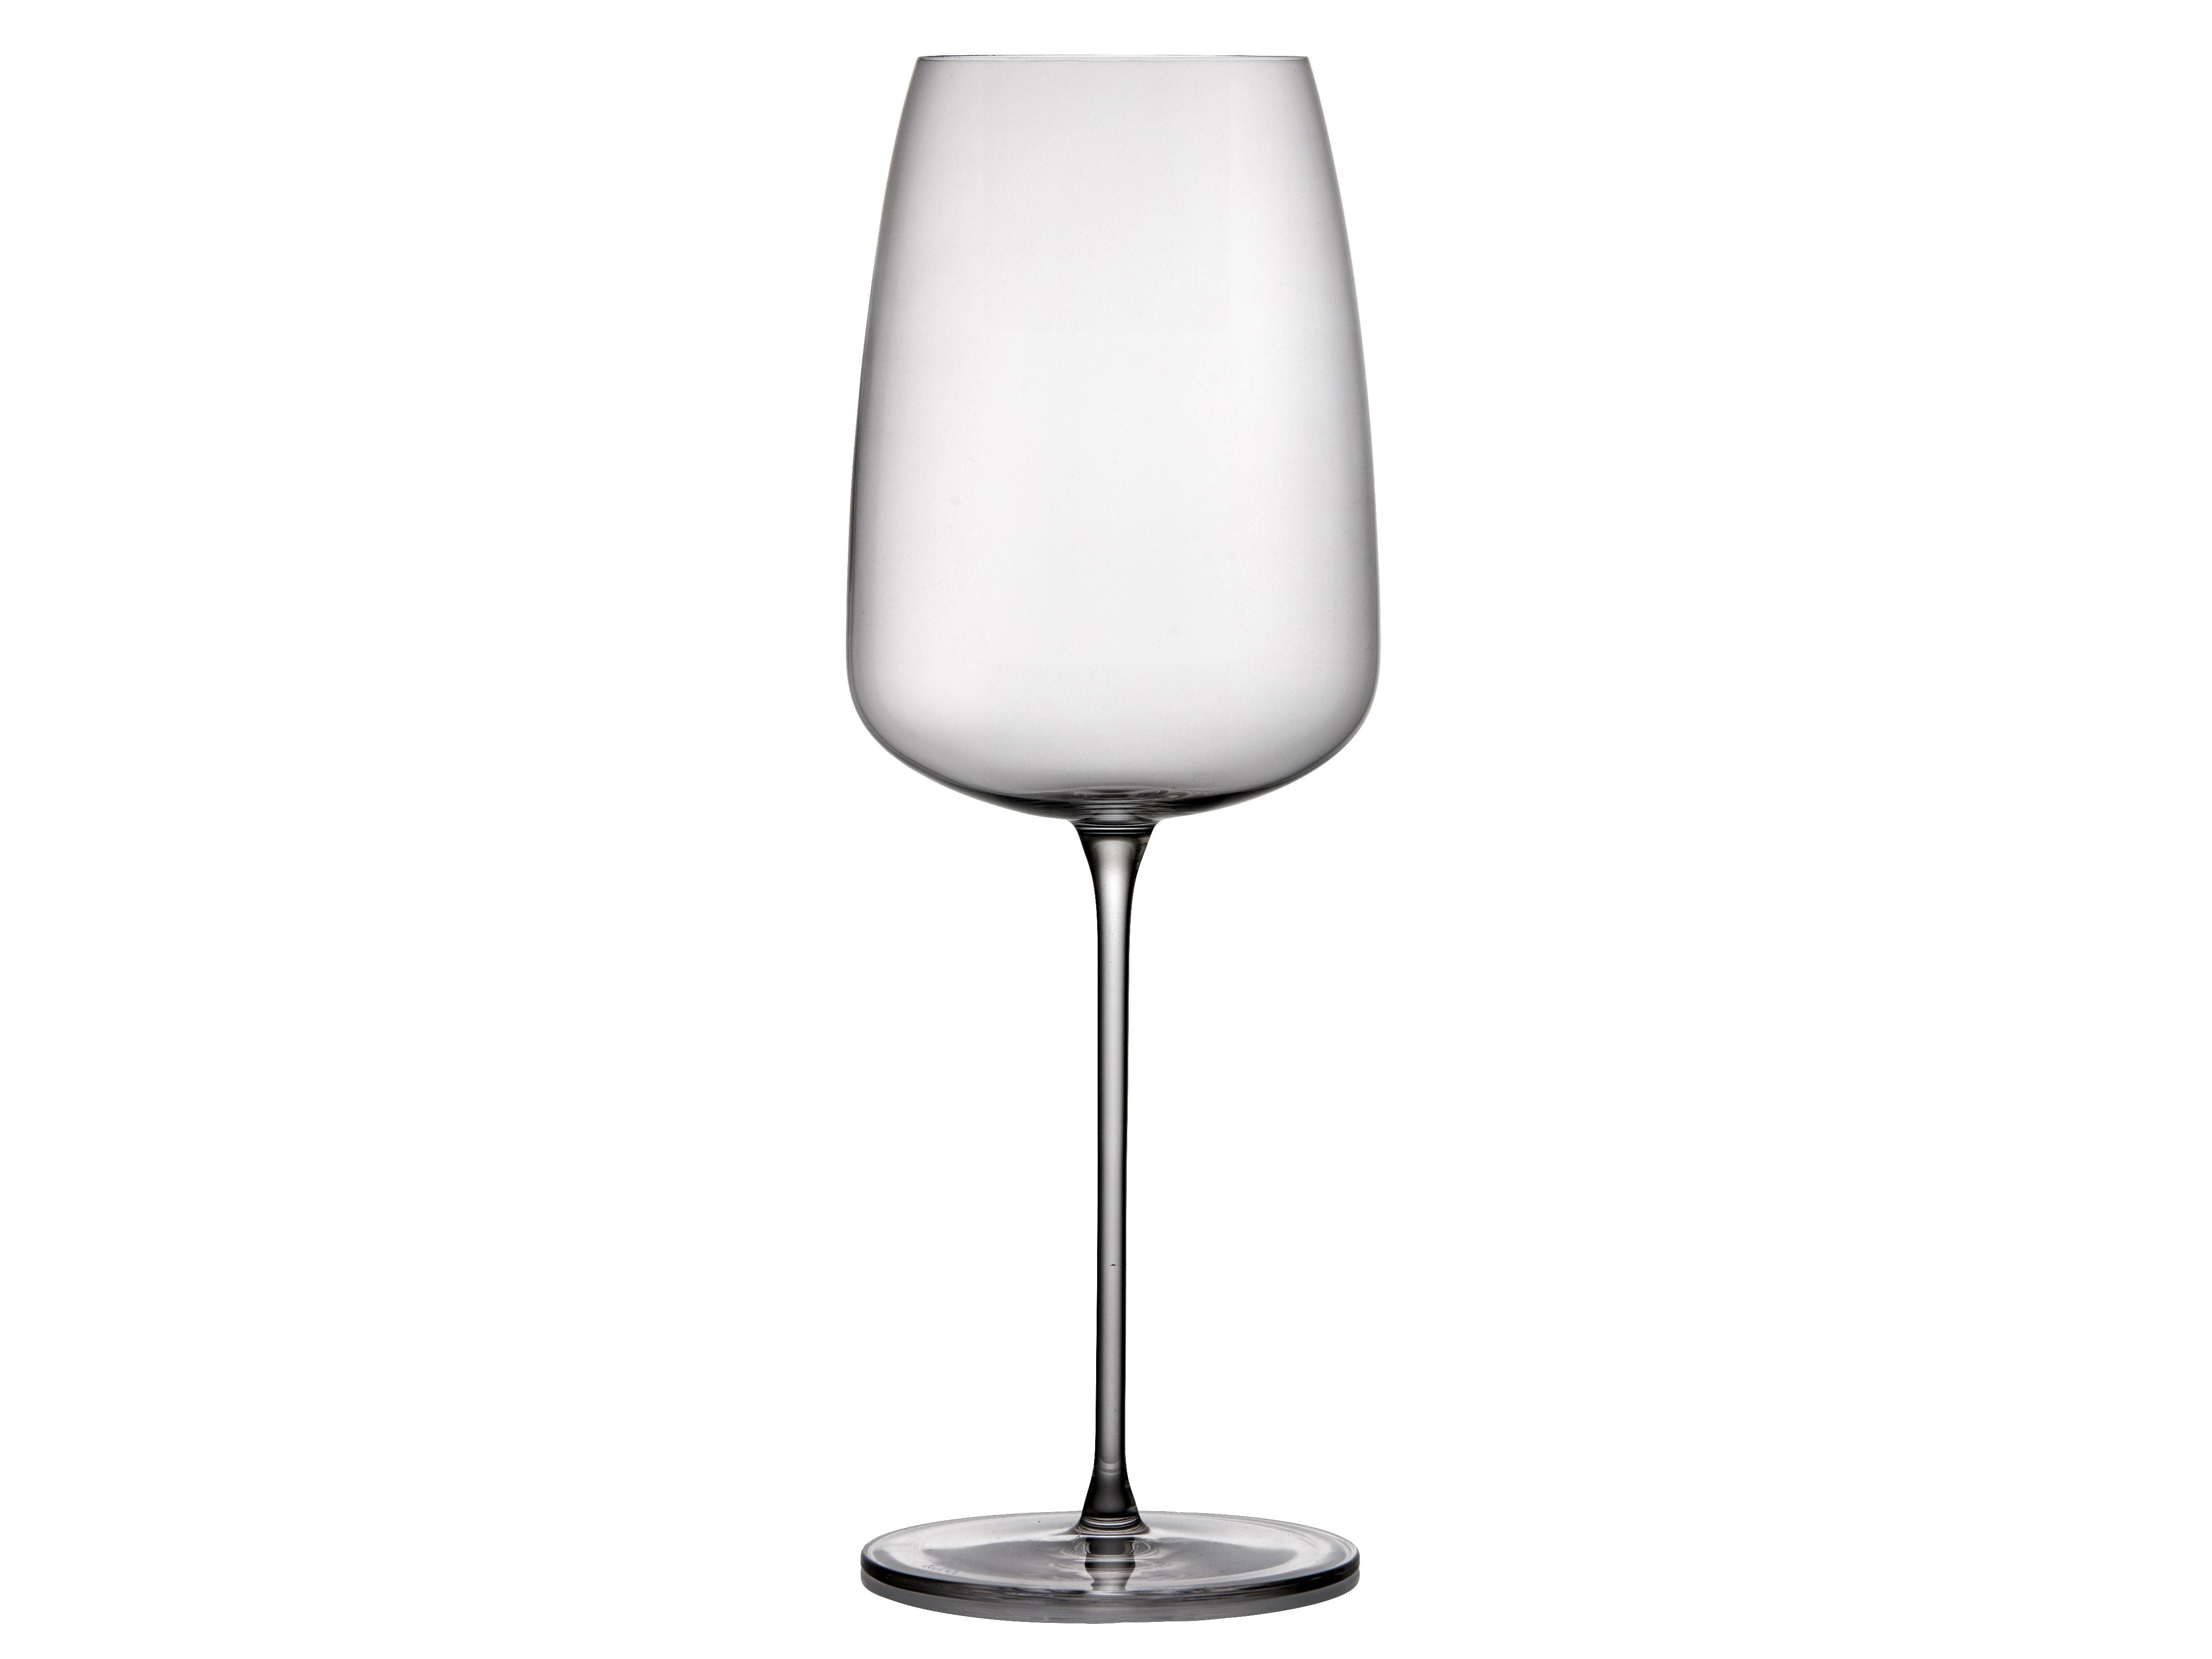 Lyngby Glas Veneto Bourgogne Glass 77 Cl 2 szt.